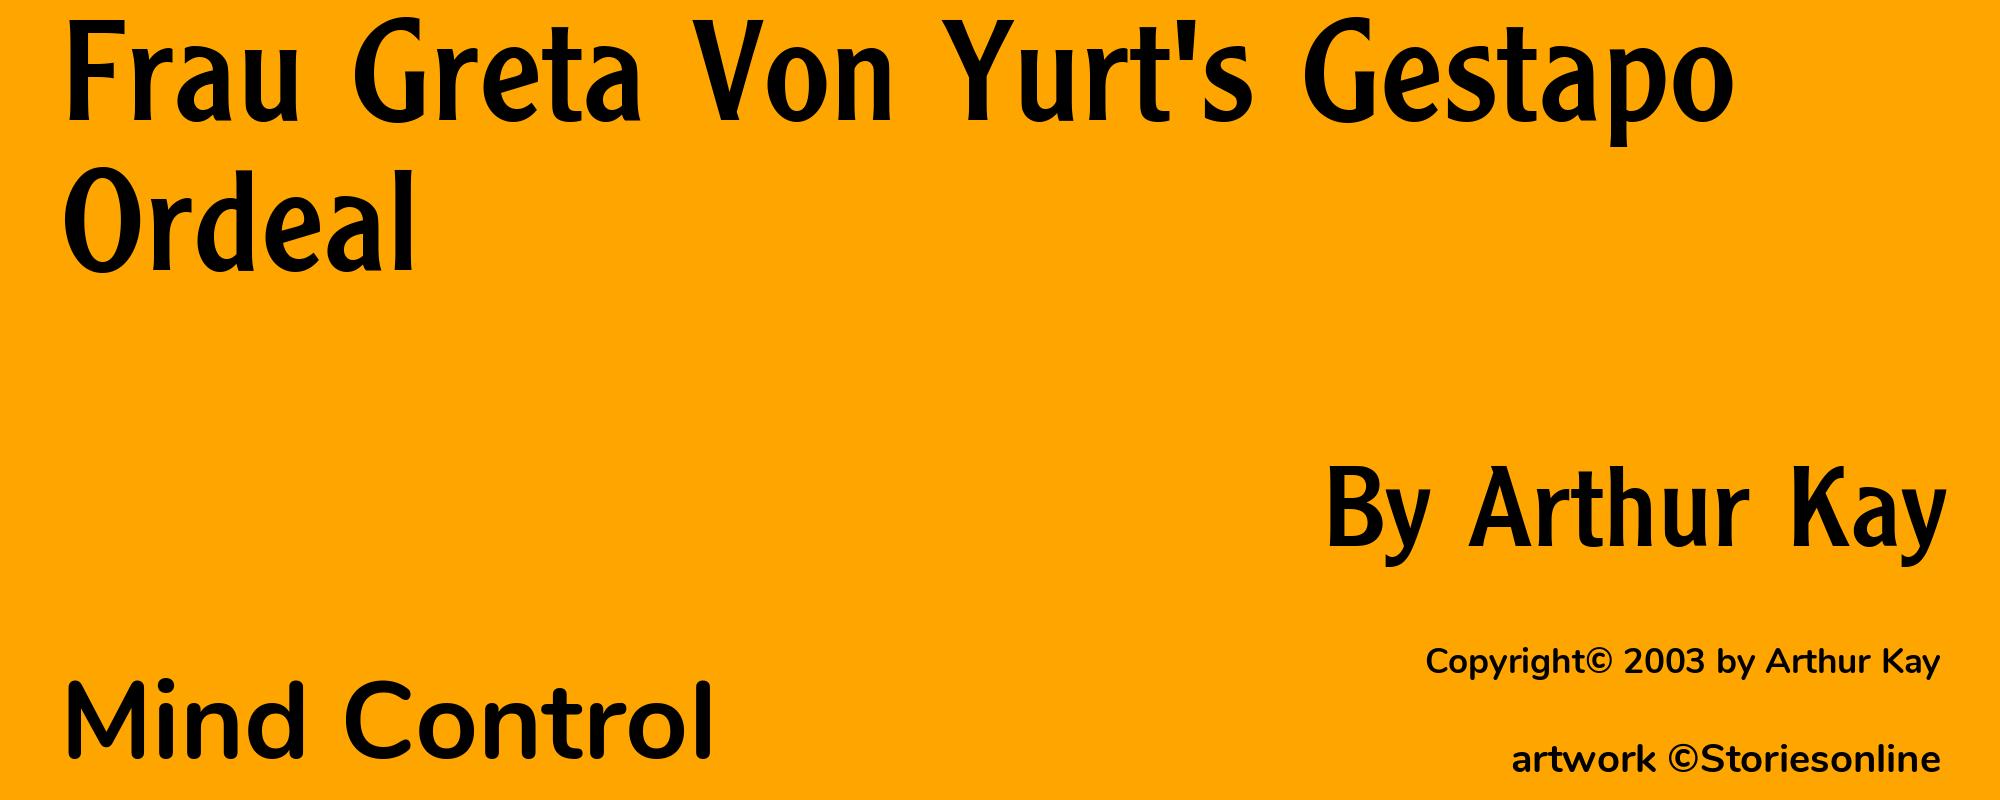 Frau Greta Von Yurt's Gestapo Ordeal - Cover